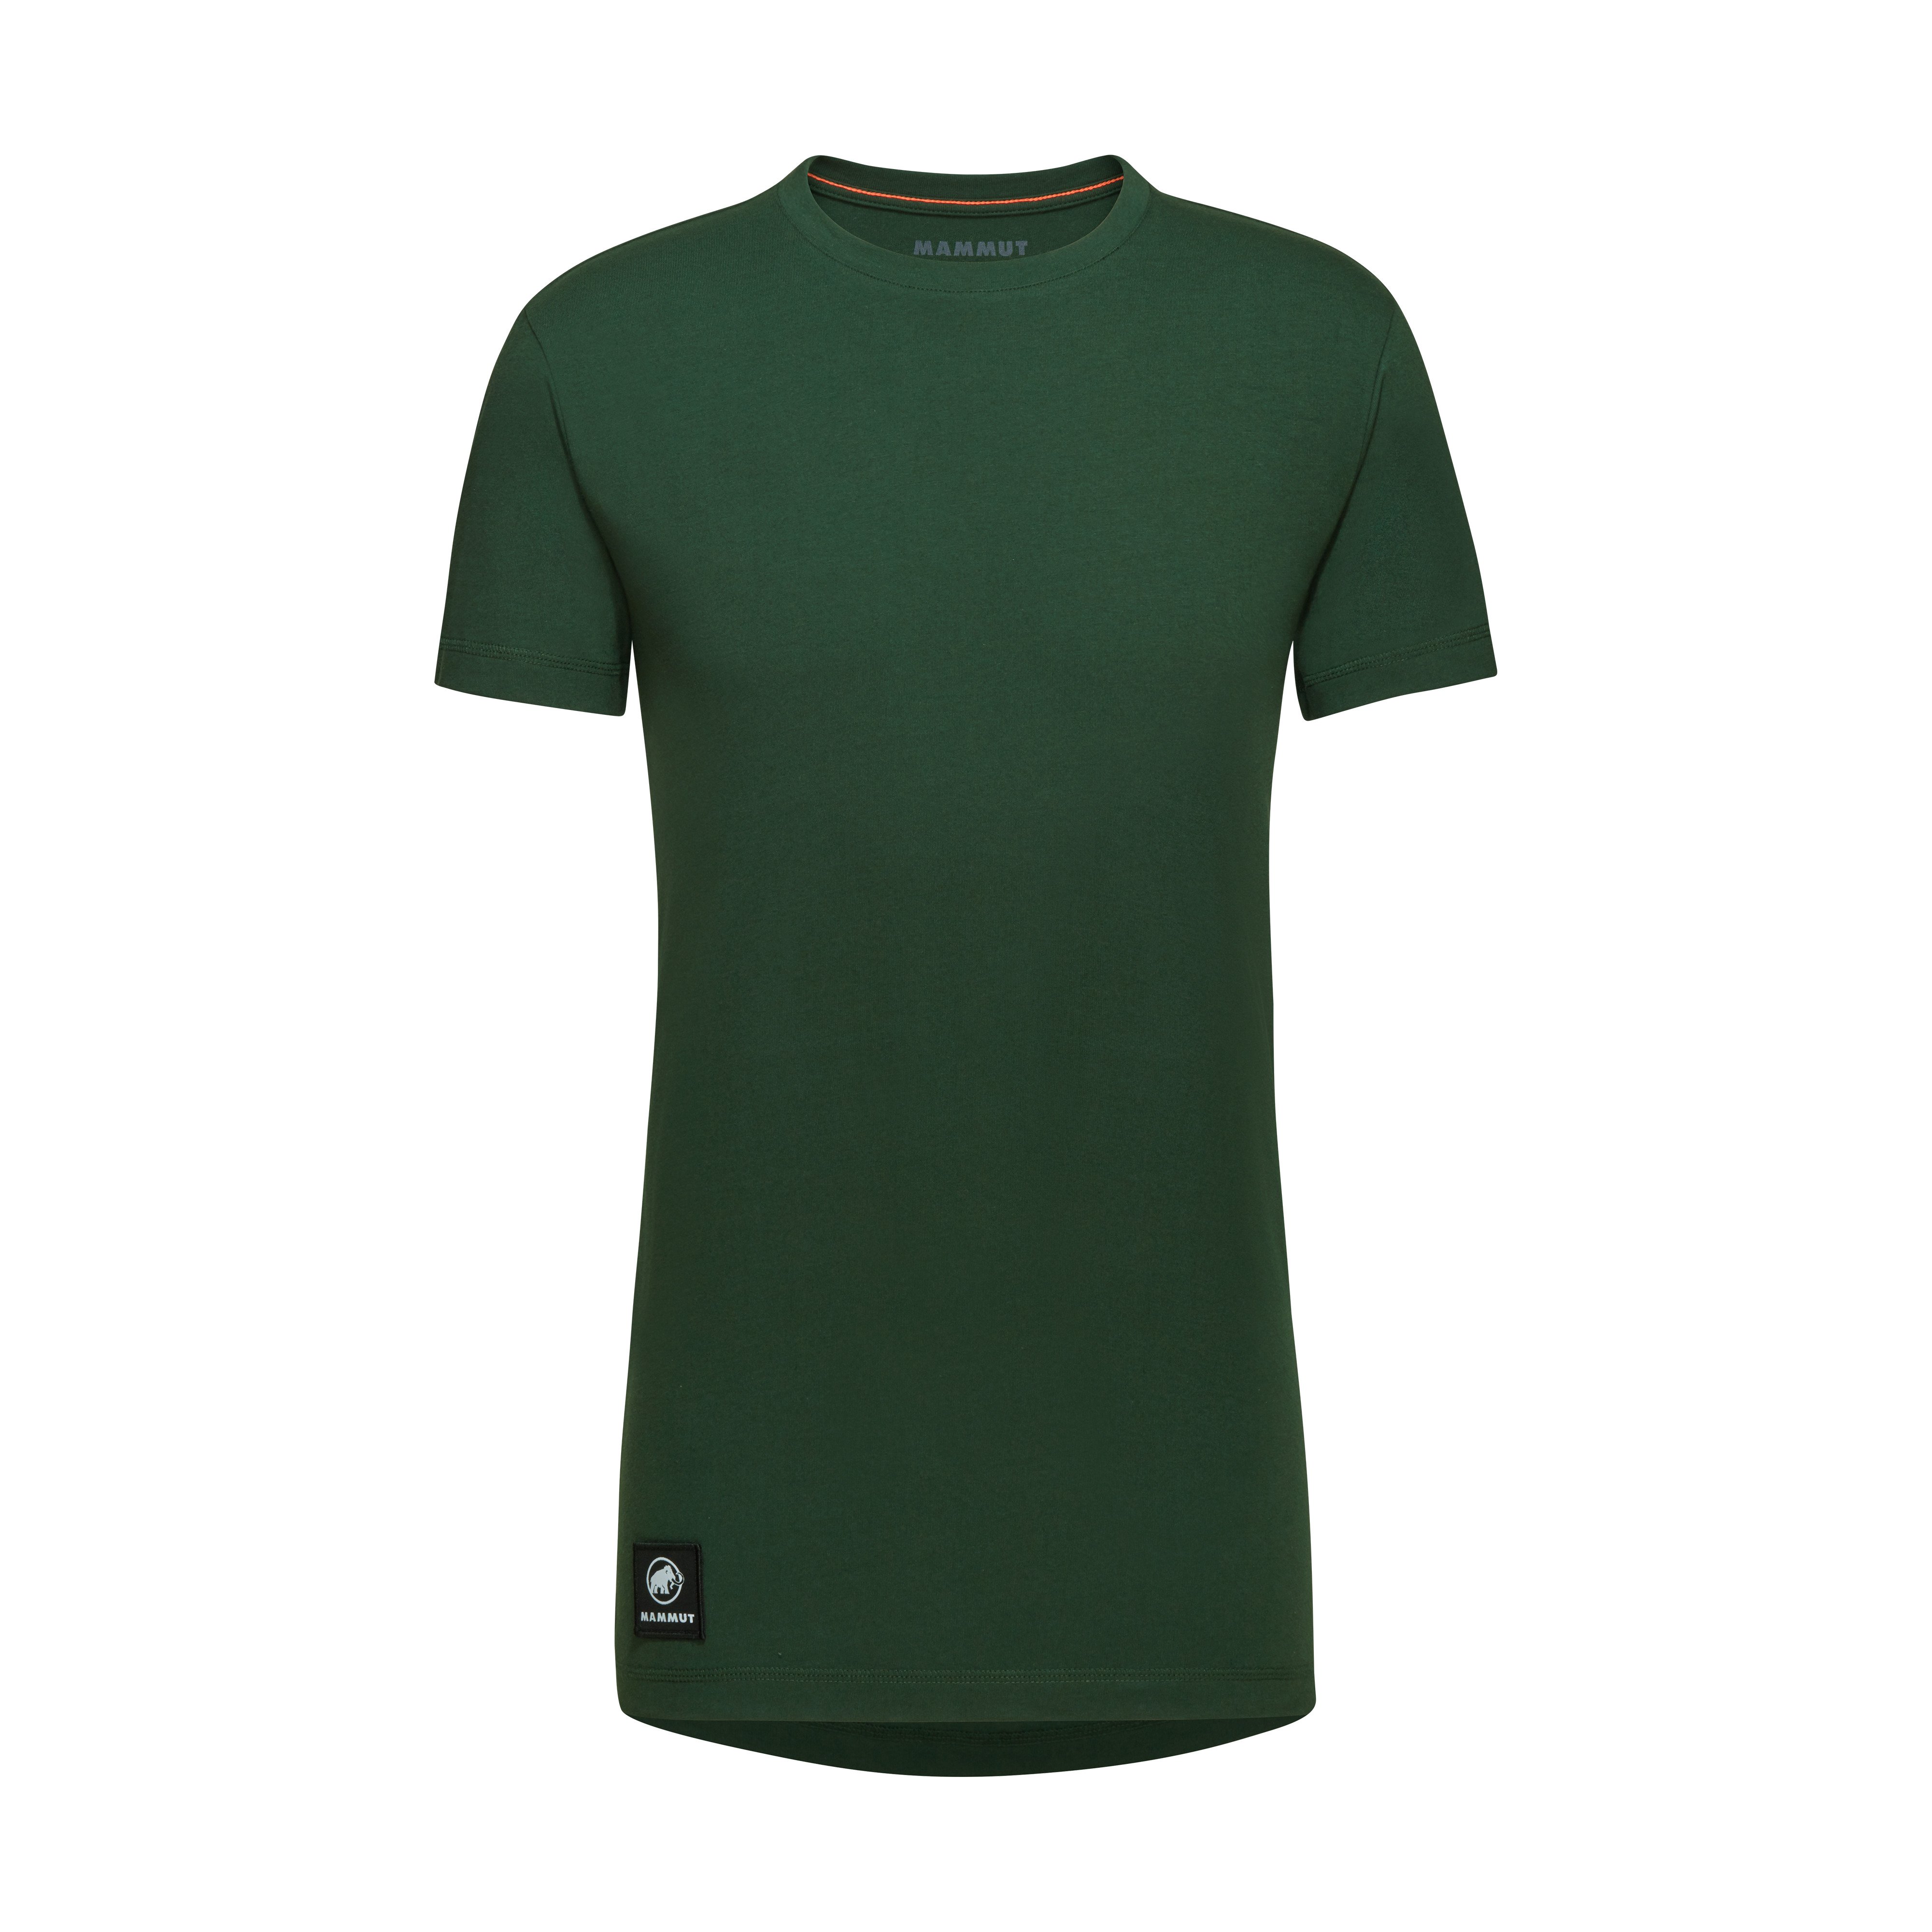 Massone T-Shirt Men Patch - woods, S product image